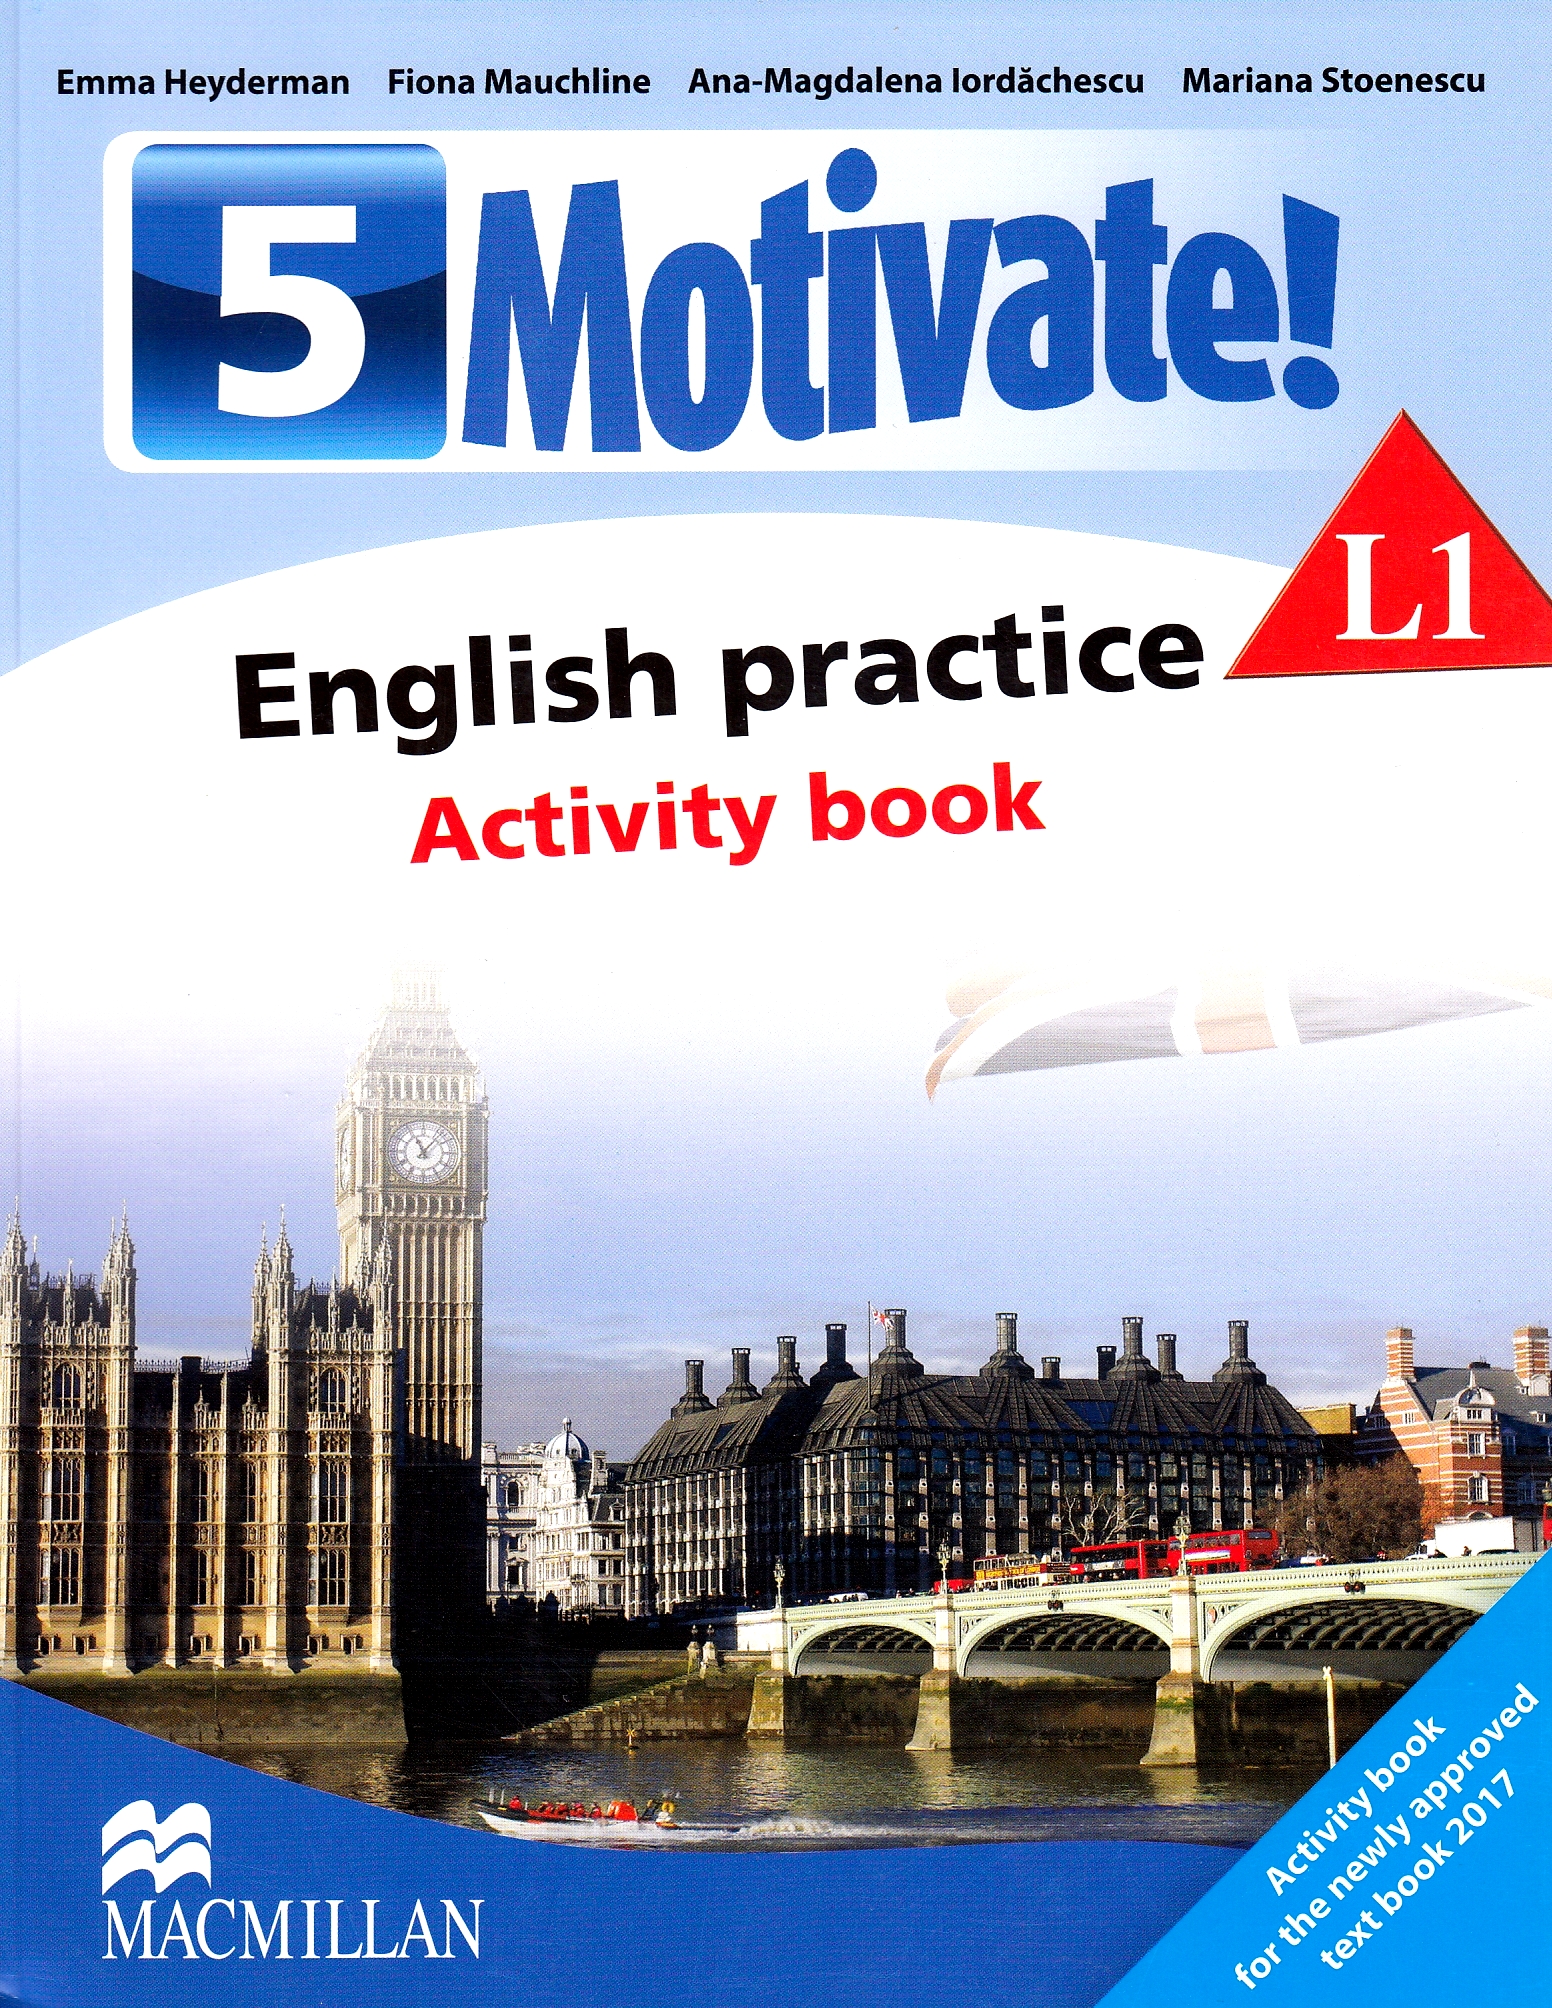 Motivate! English practice L1. Activity book. Lectia de engleza - Clasa 5 - Emma Heyderman